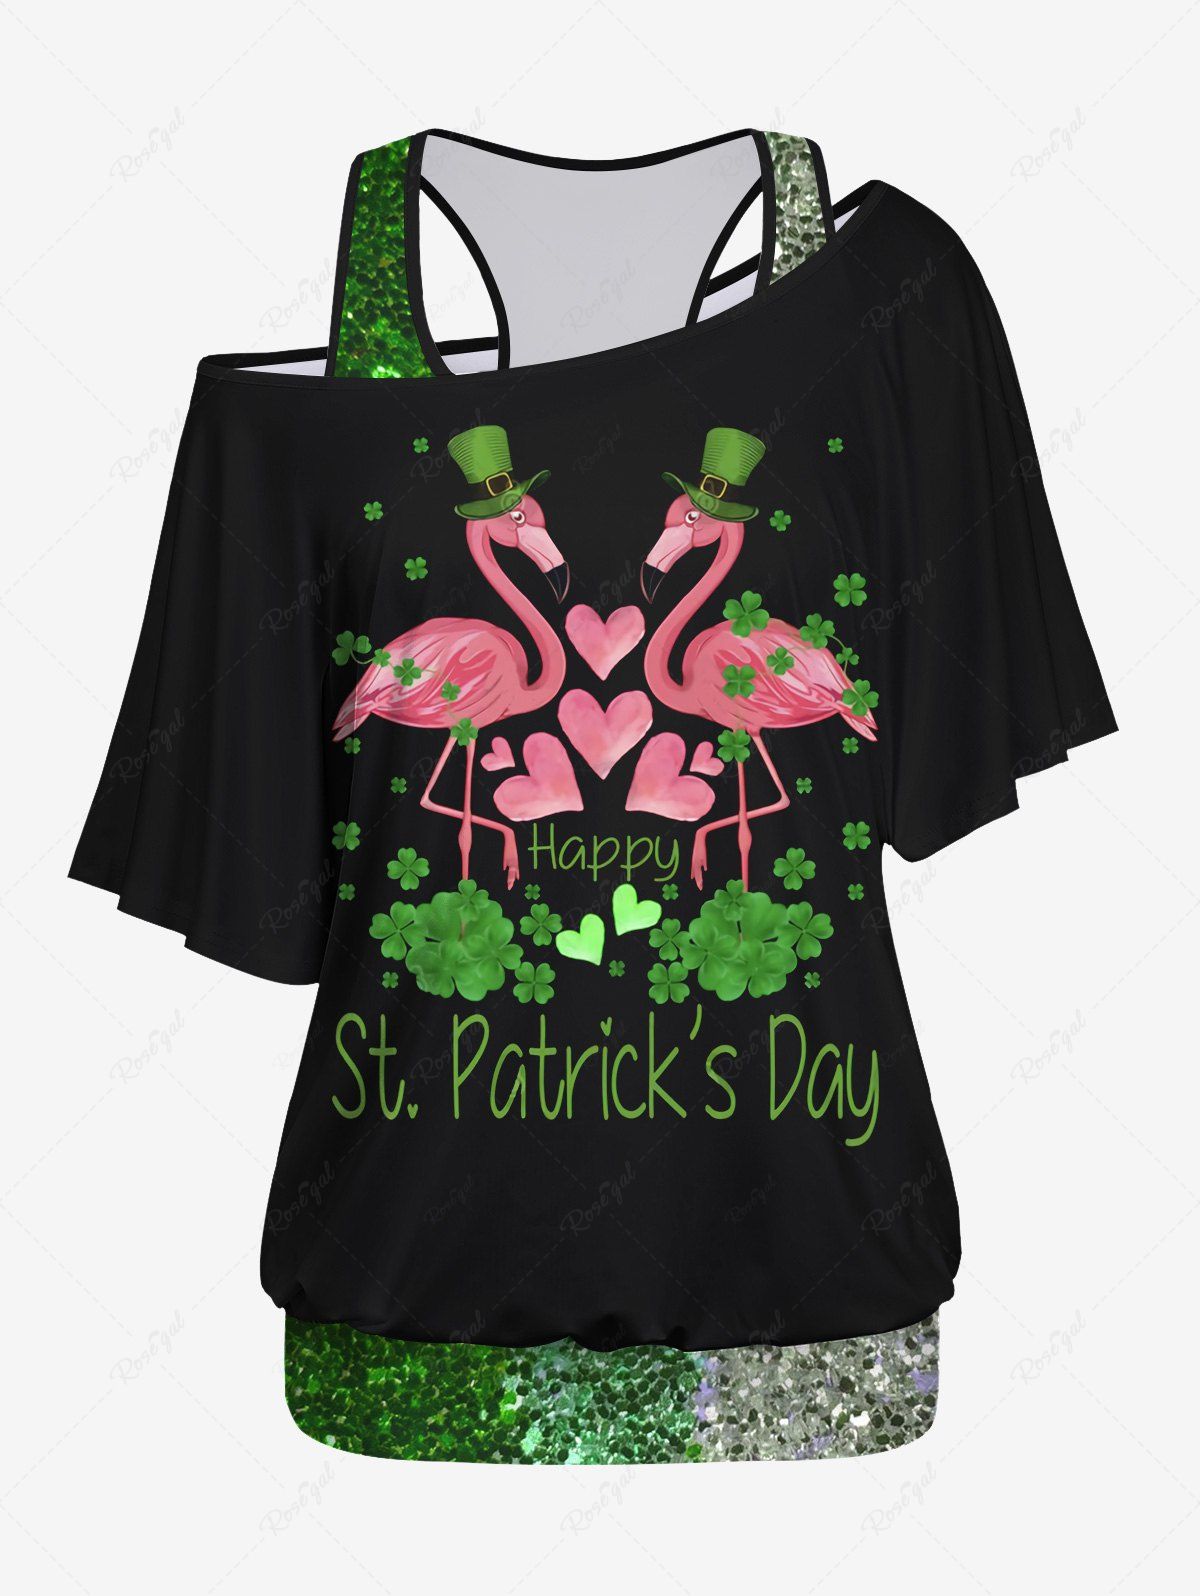 Fashion Plus Size Glitter Sparkling Sequins Print Racerback Tank Top and Crane Heart Four Leaf Clover Graphic St. Patrick's Day T-shirt Set  